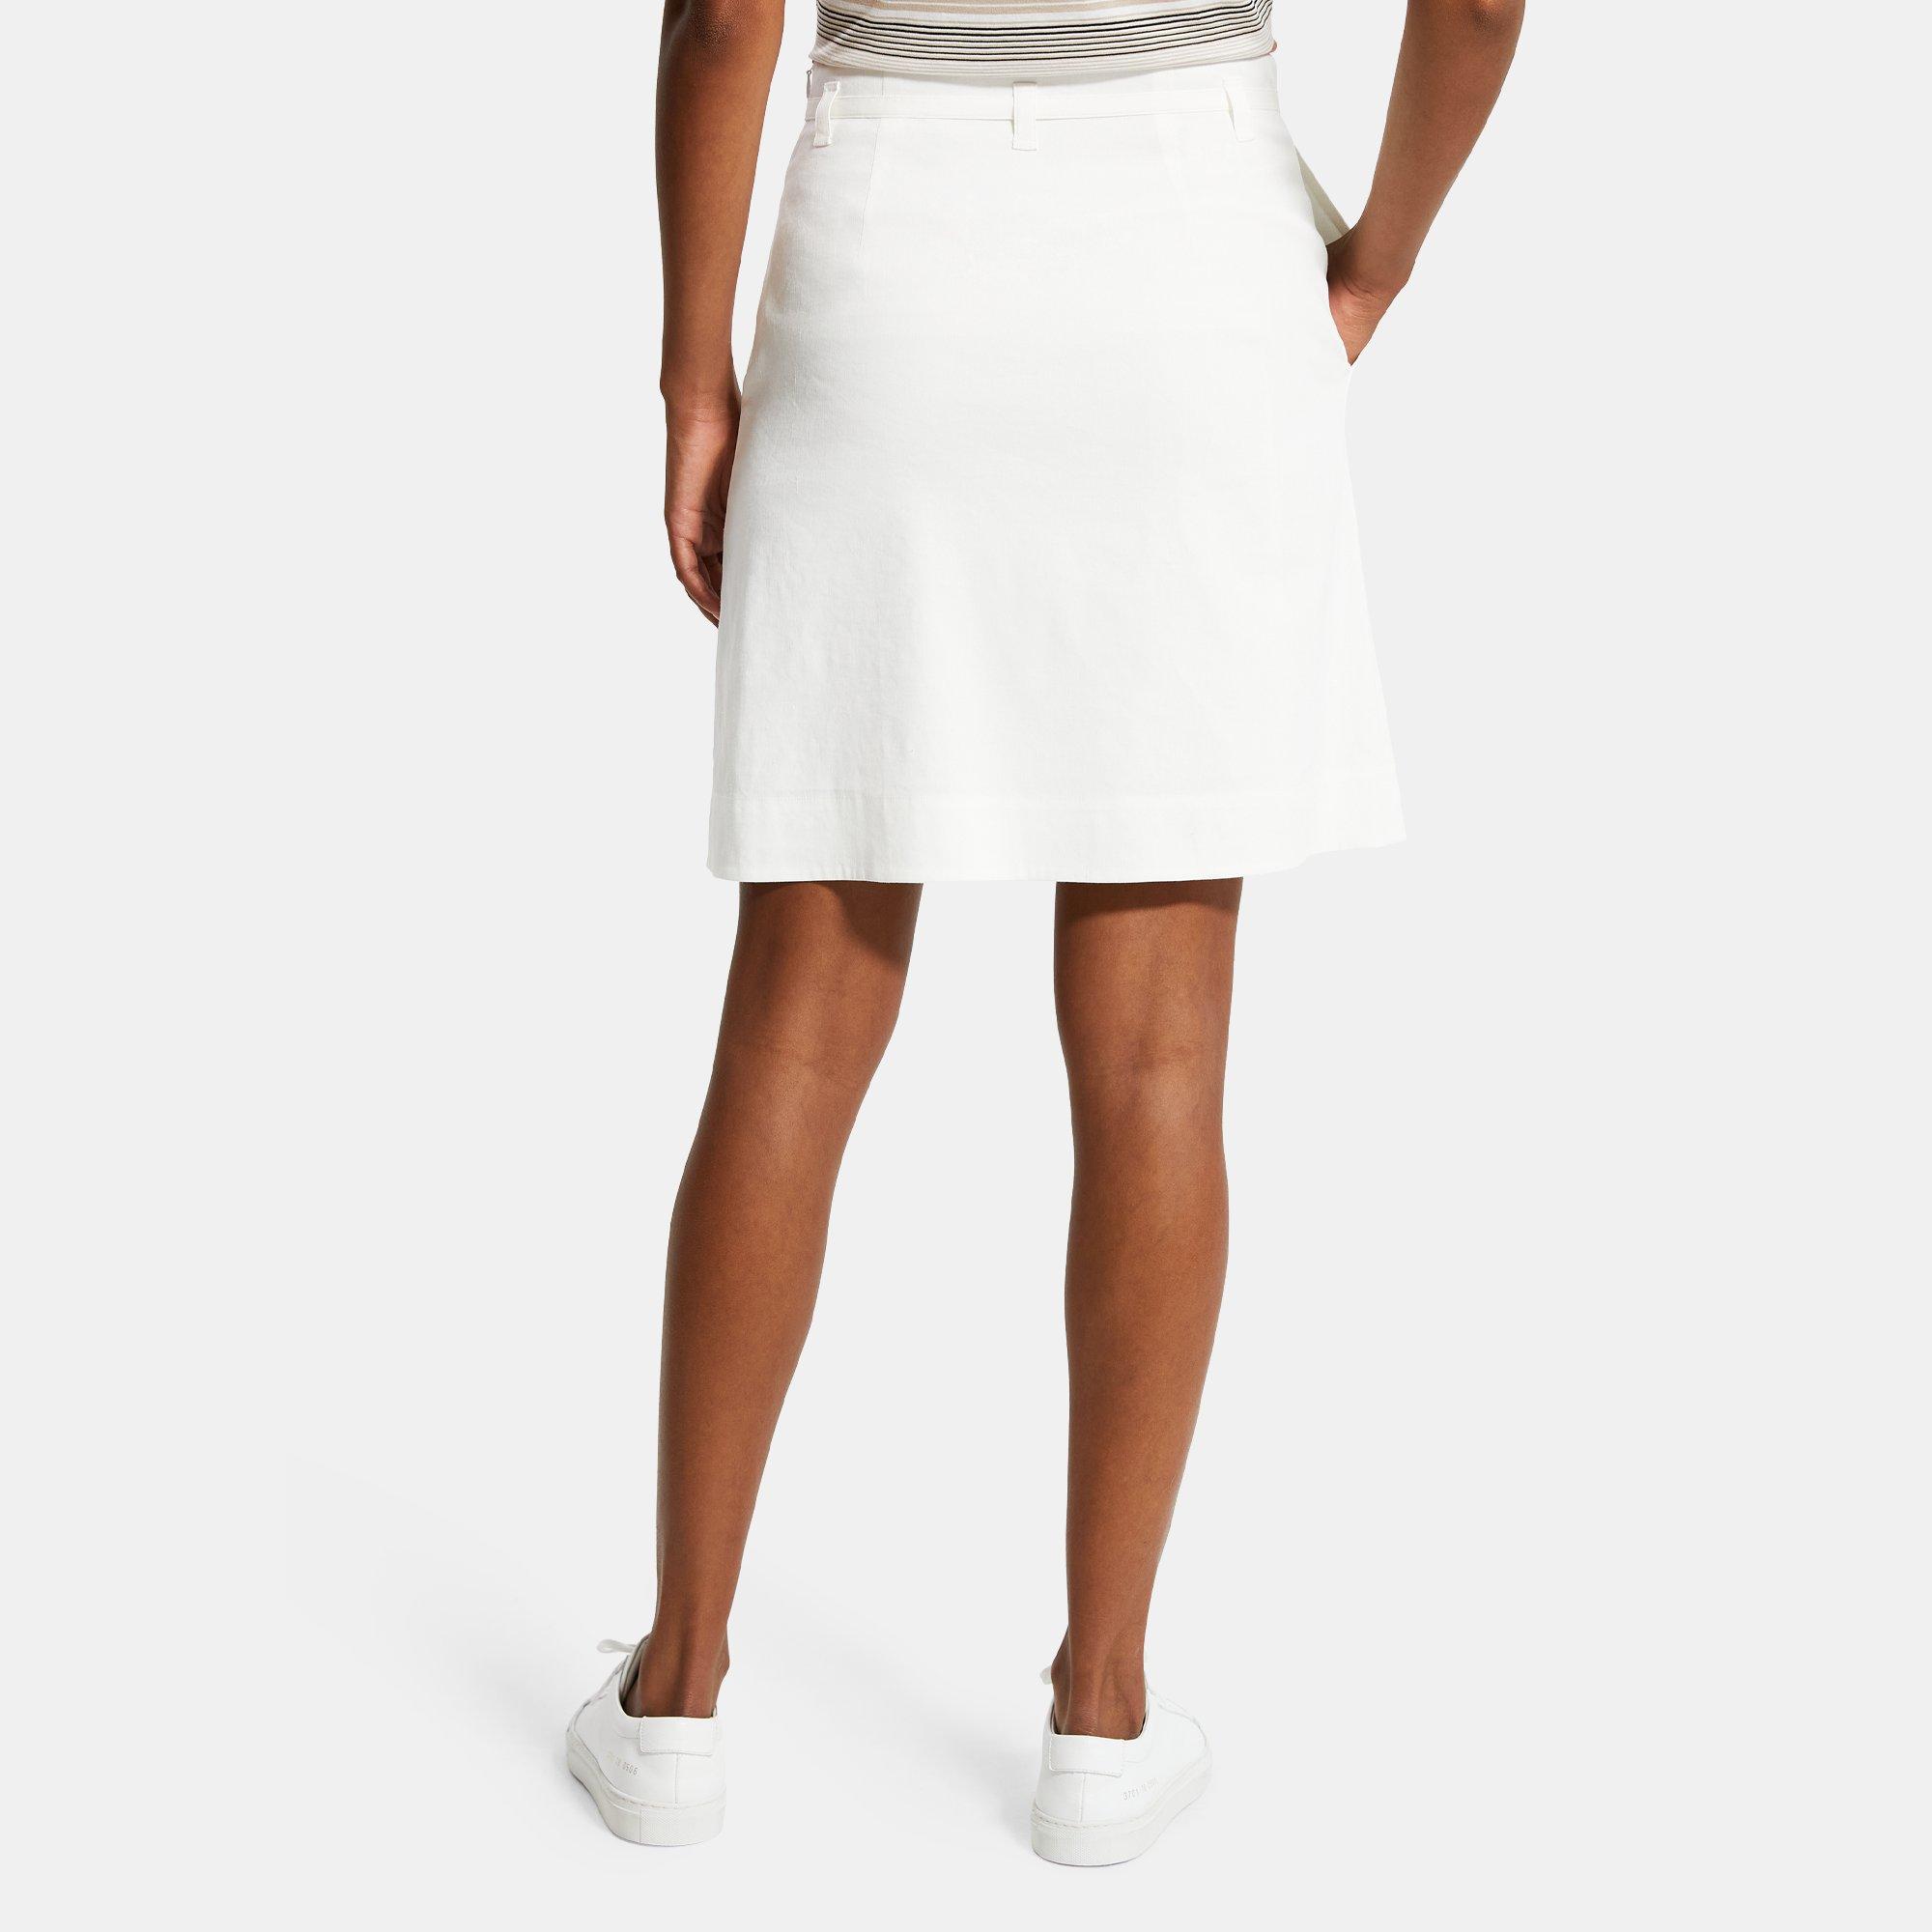 7th Avenue - Hi-Lo Fit & Flare Pencil Skirt - City Stretch Linen